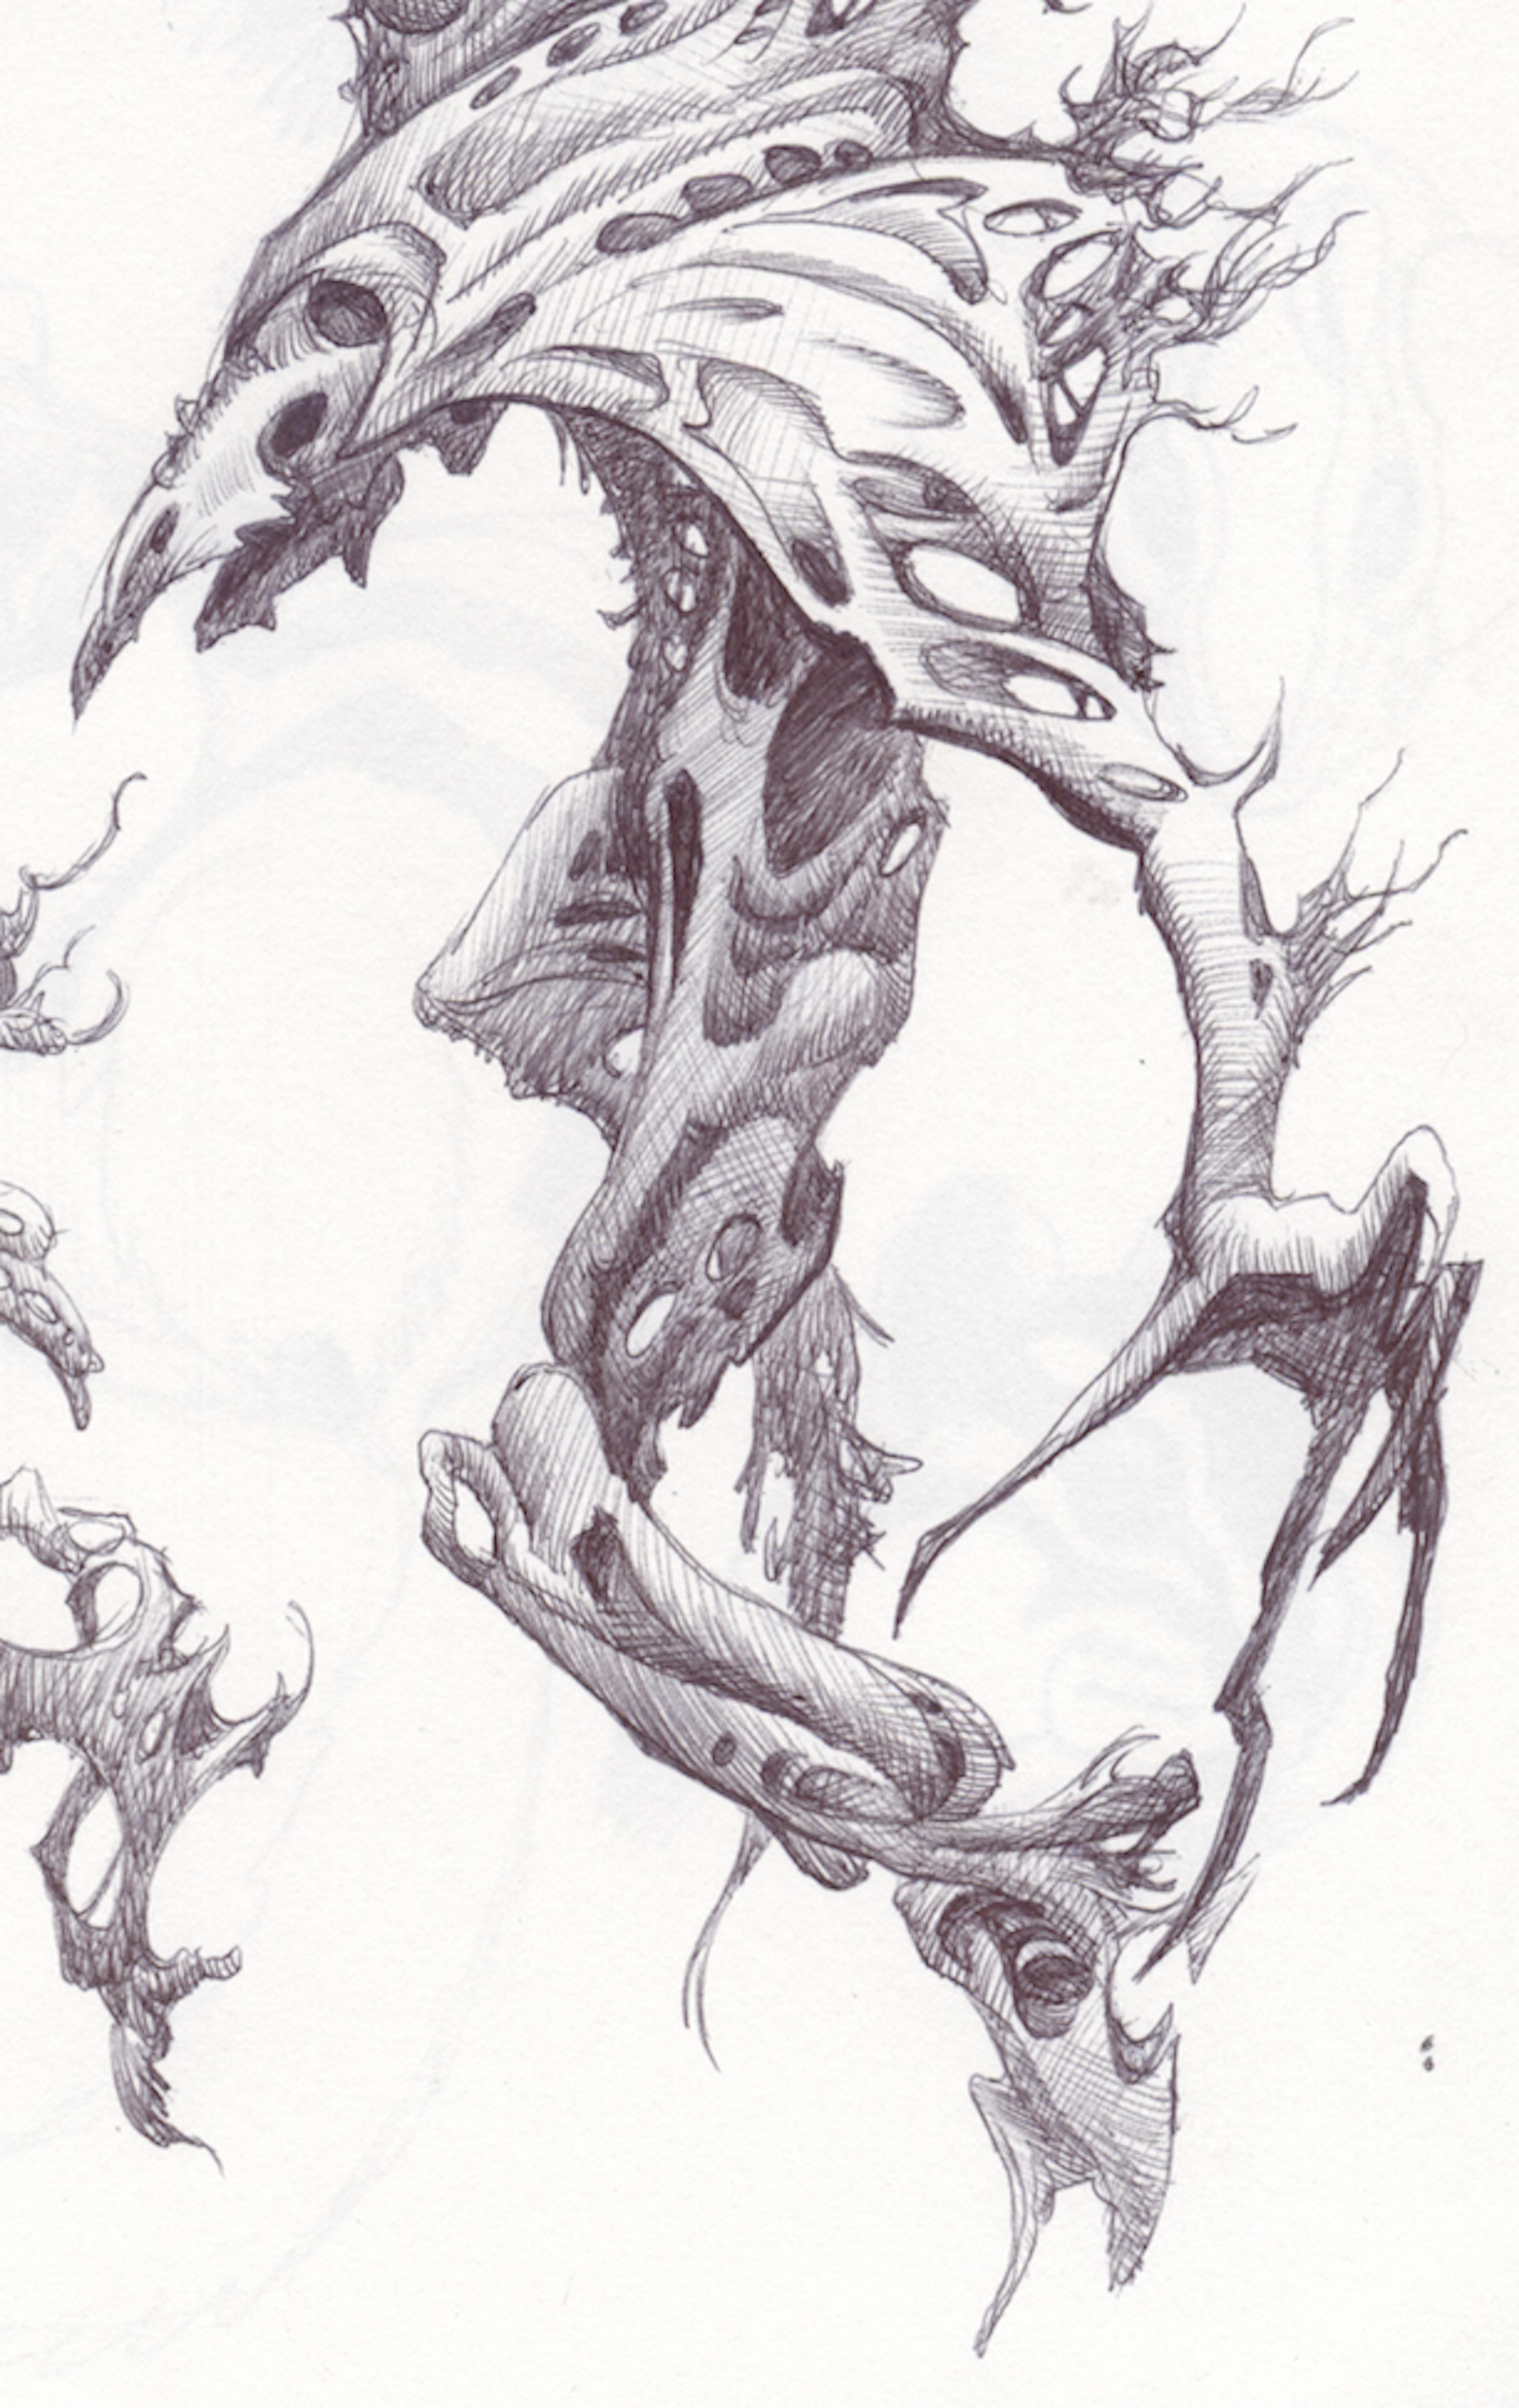 A sketch of a bone monster